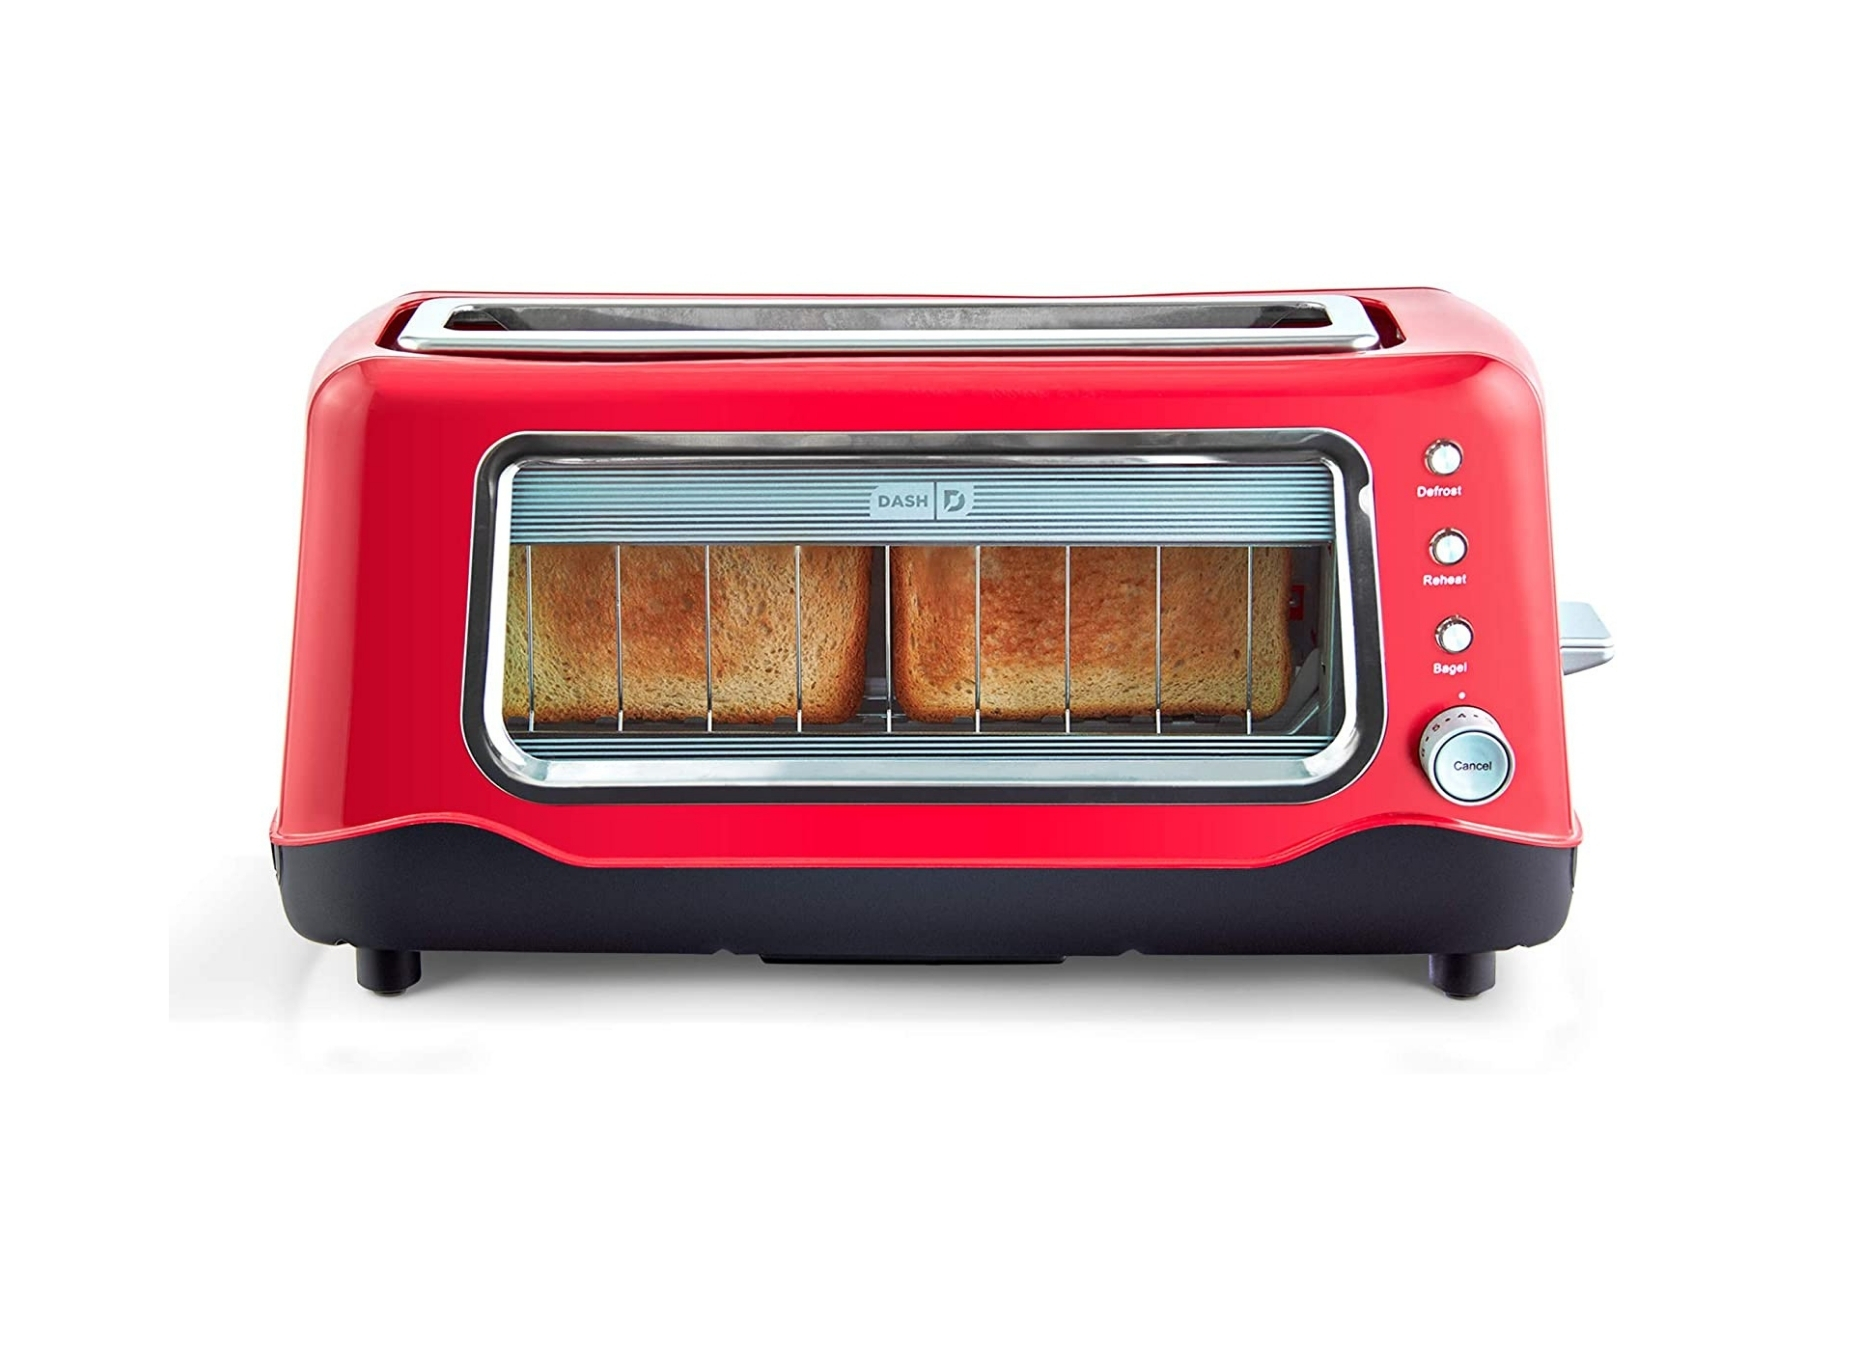 Dash Red Toaster